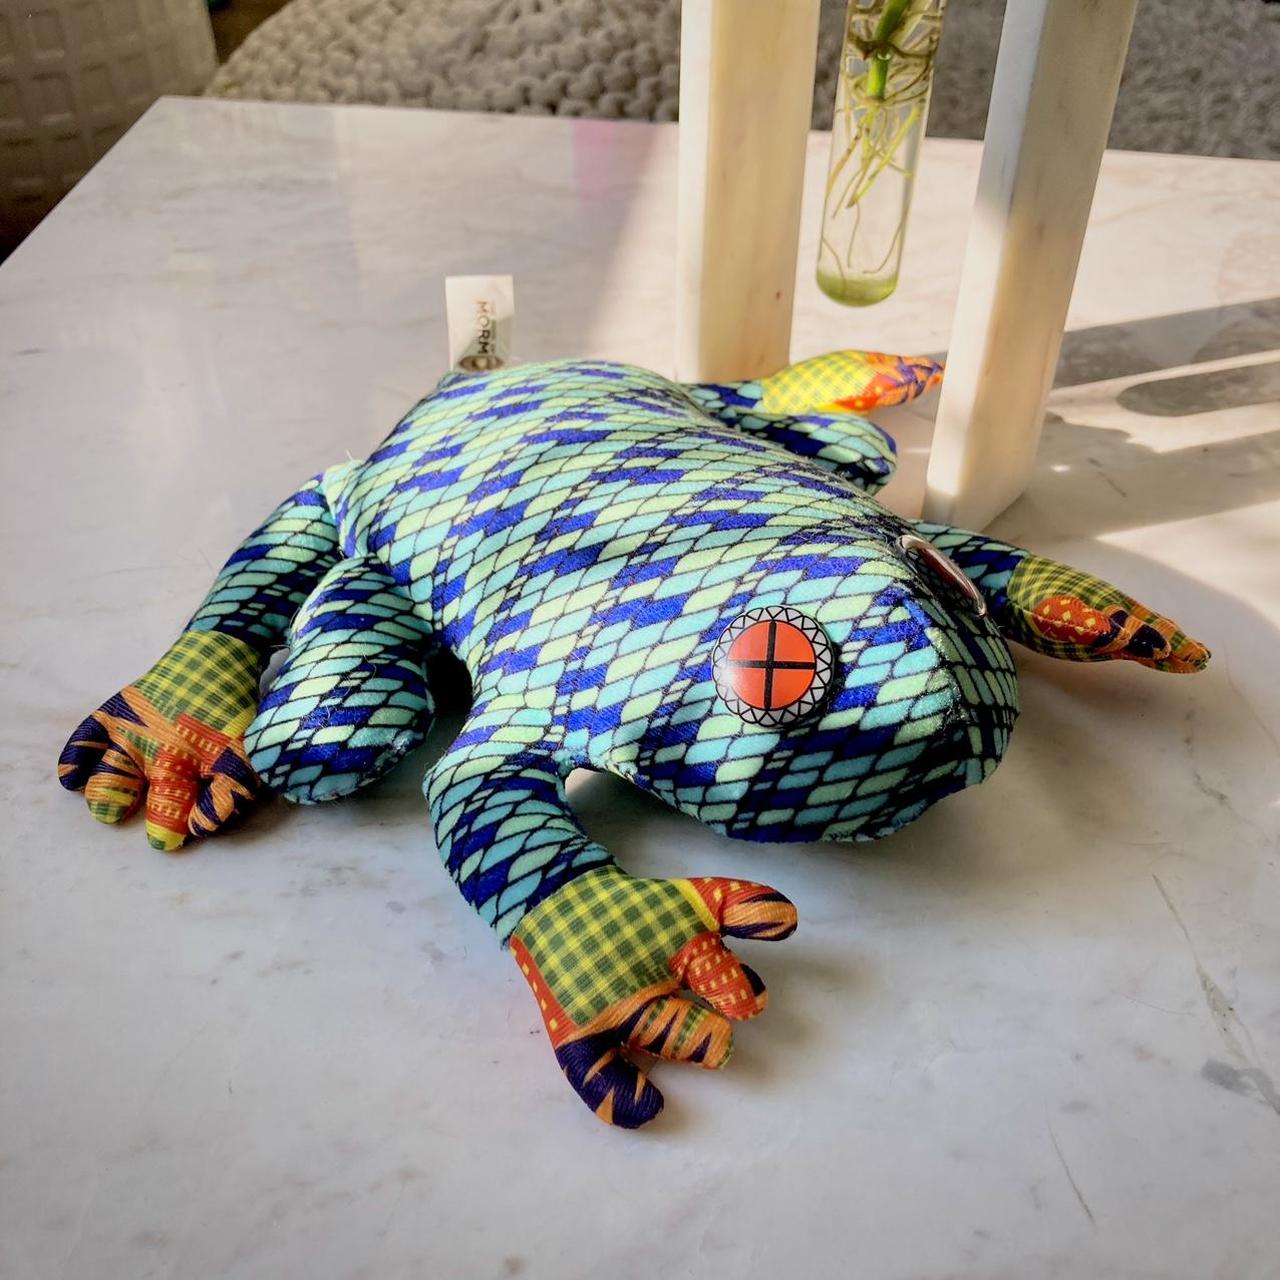 Froggy plush 🐸 #frog #animal #stuffed #theater #toy - Depop